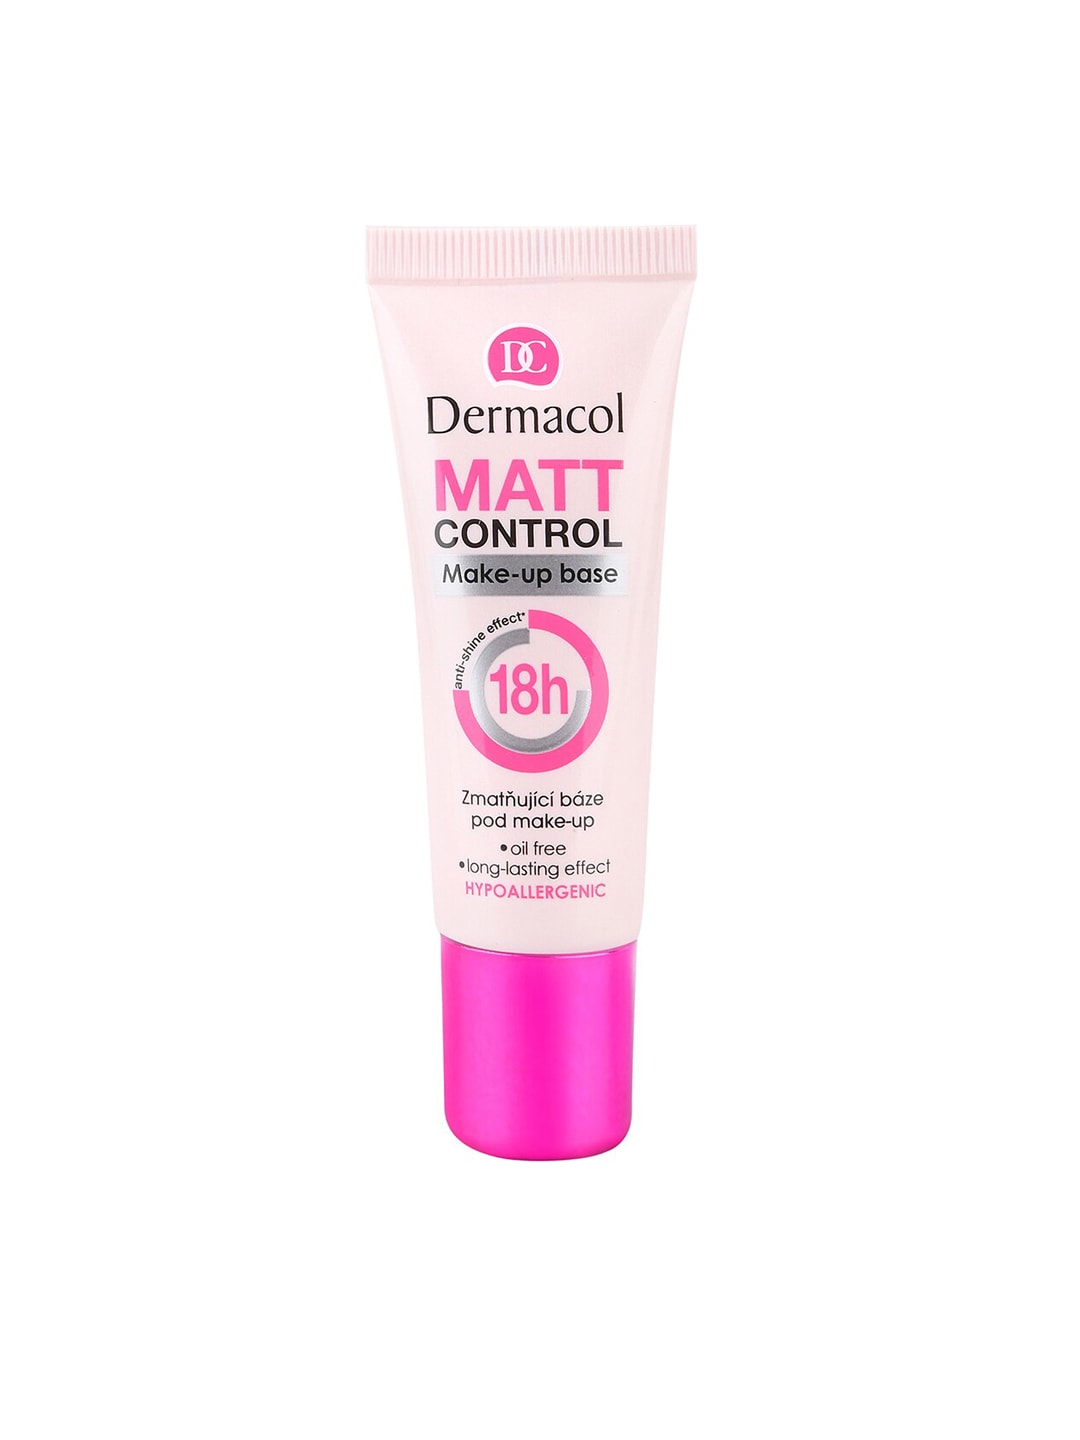 Dermacol MATT CONTROL Make-Up Base 1411A Price in India